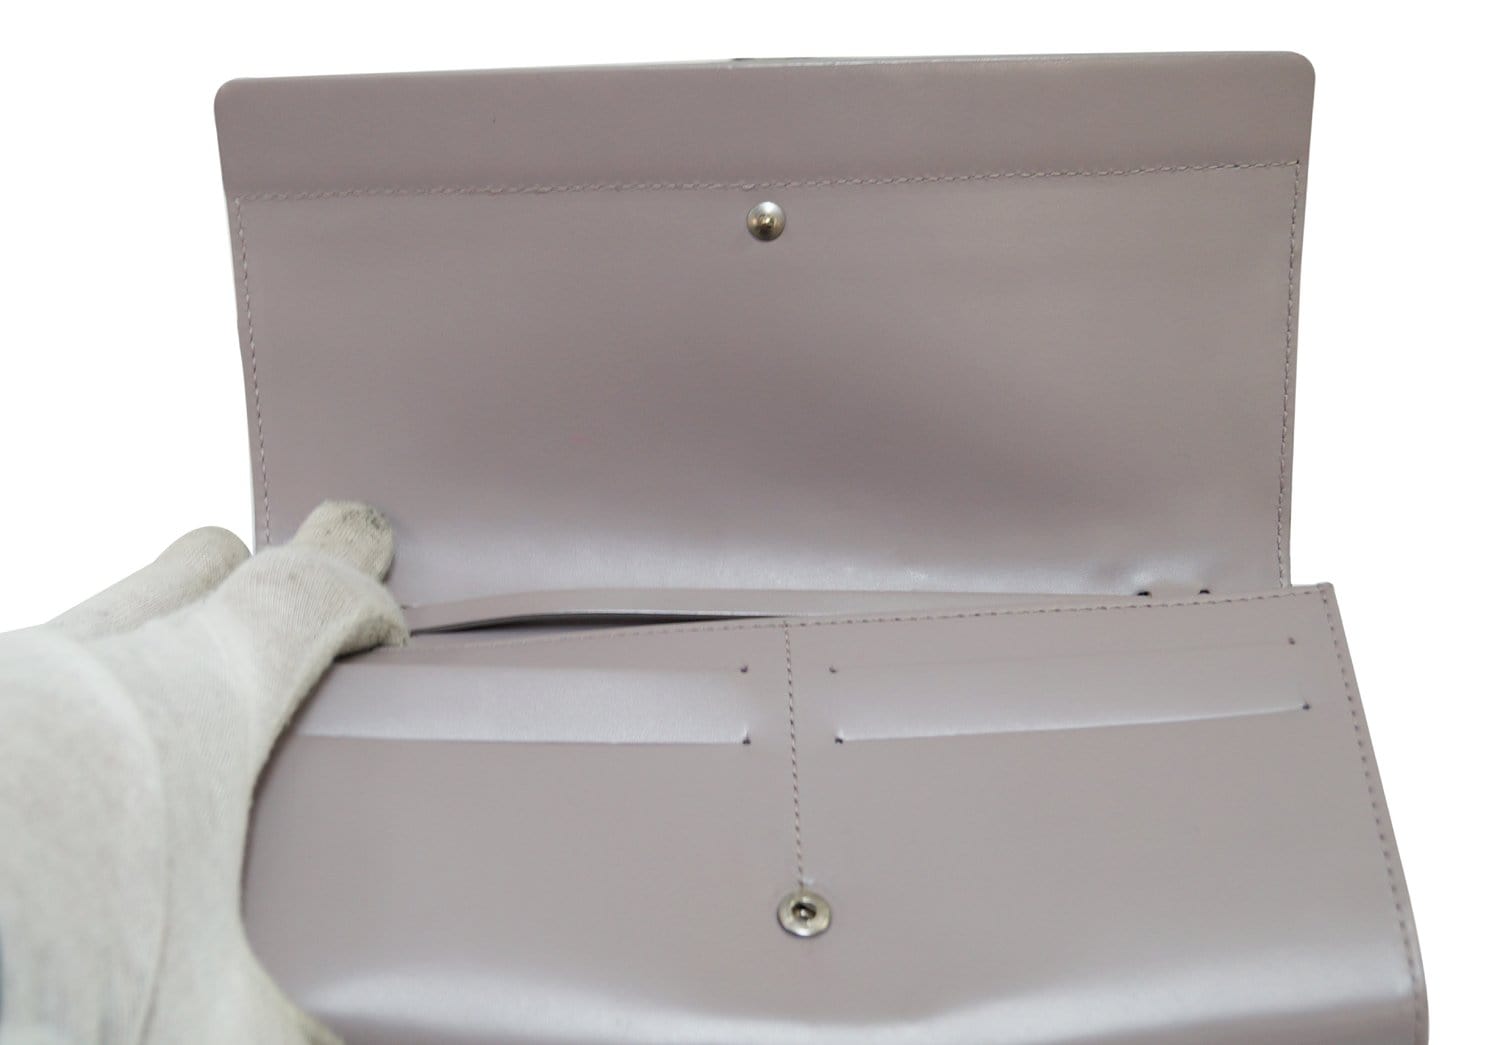 LOUIS VUITTON FW 2021 NEW White Epi Leather Invitation Envelope Pouch Bag  Clutch